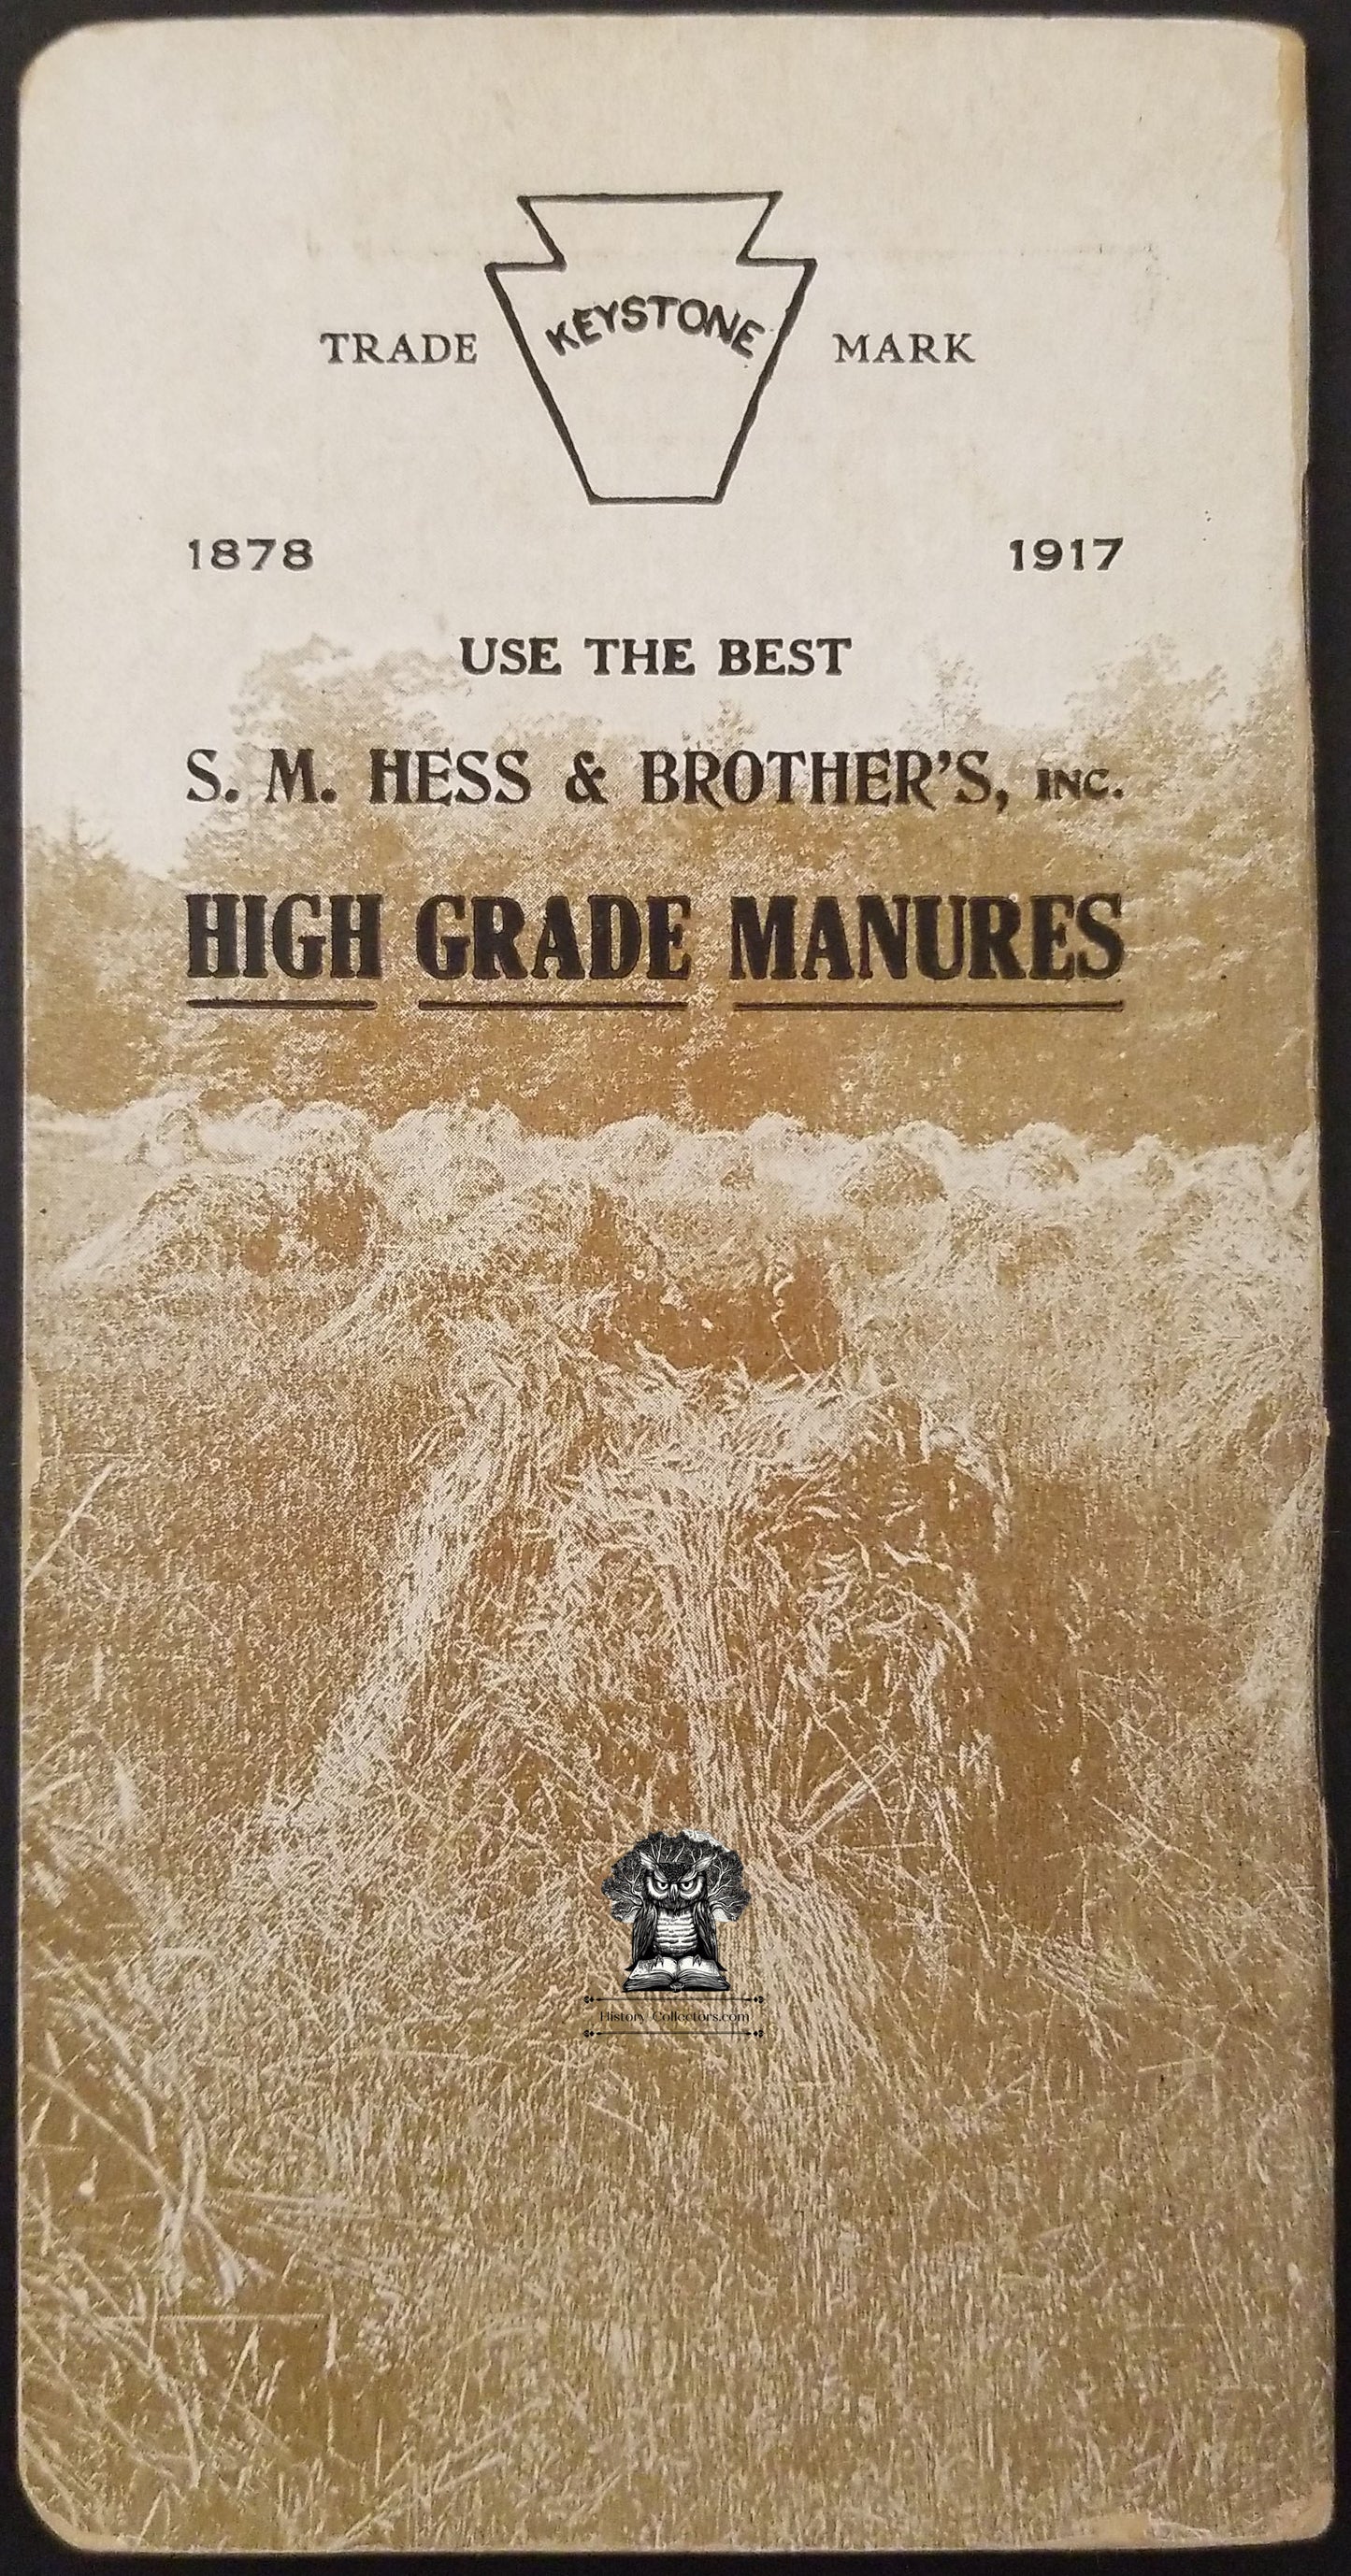 1917 Advertising Memo Booklet S.M. Hess & Brother Philadelphia PA - Farmer Fertilizers Calendar